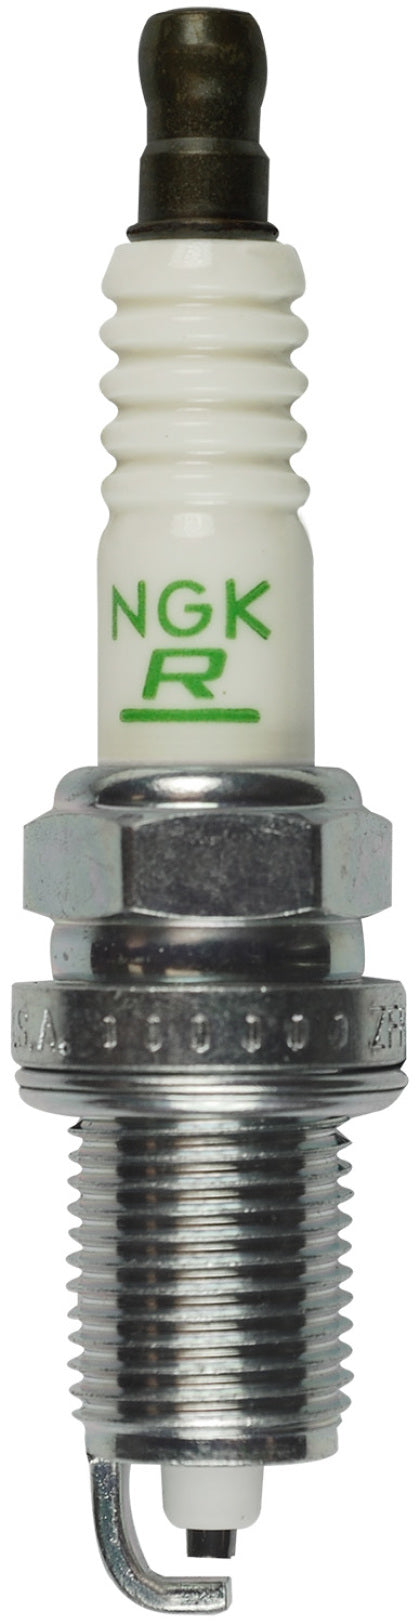 NGK - Nickel Spark Plug Heat Range 5